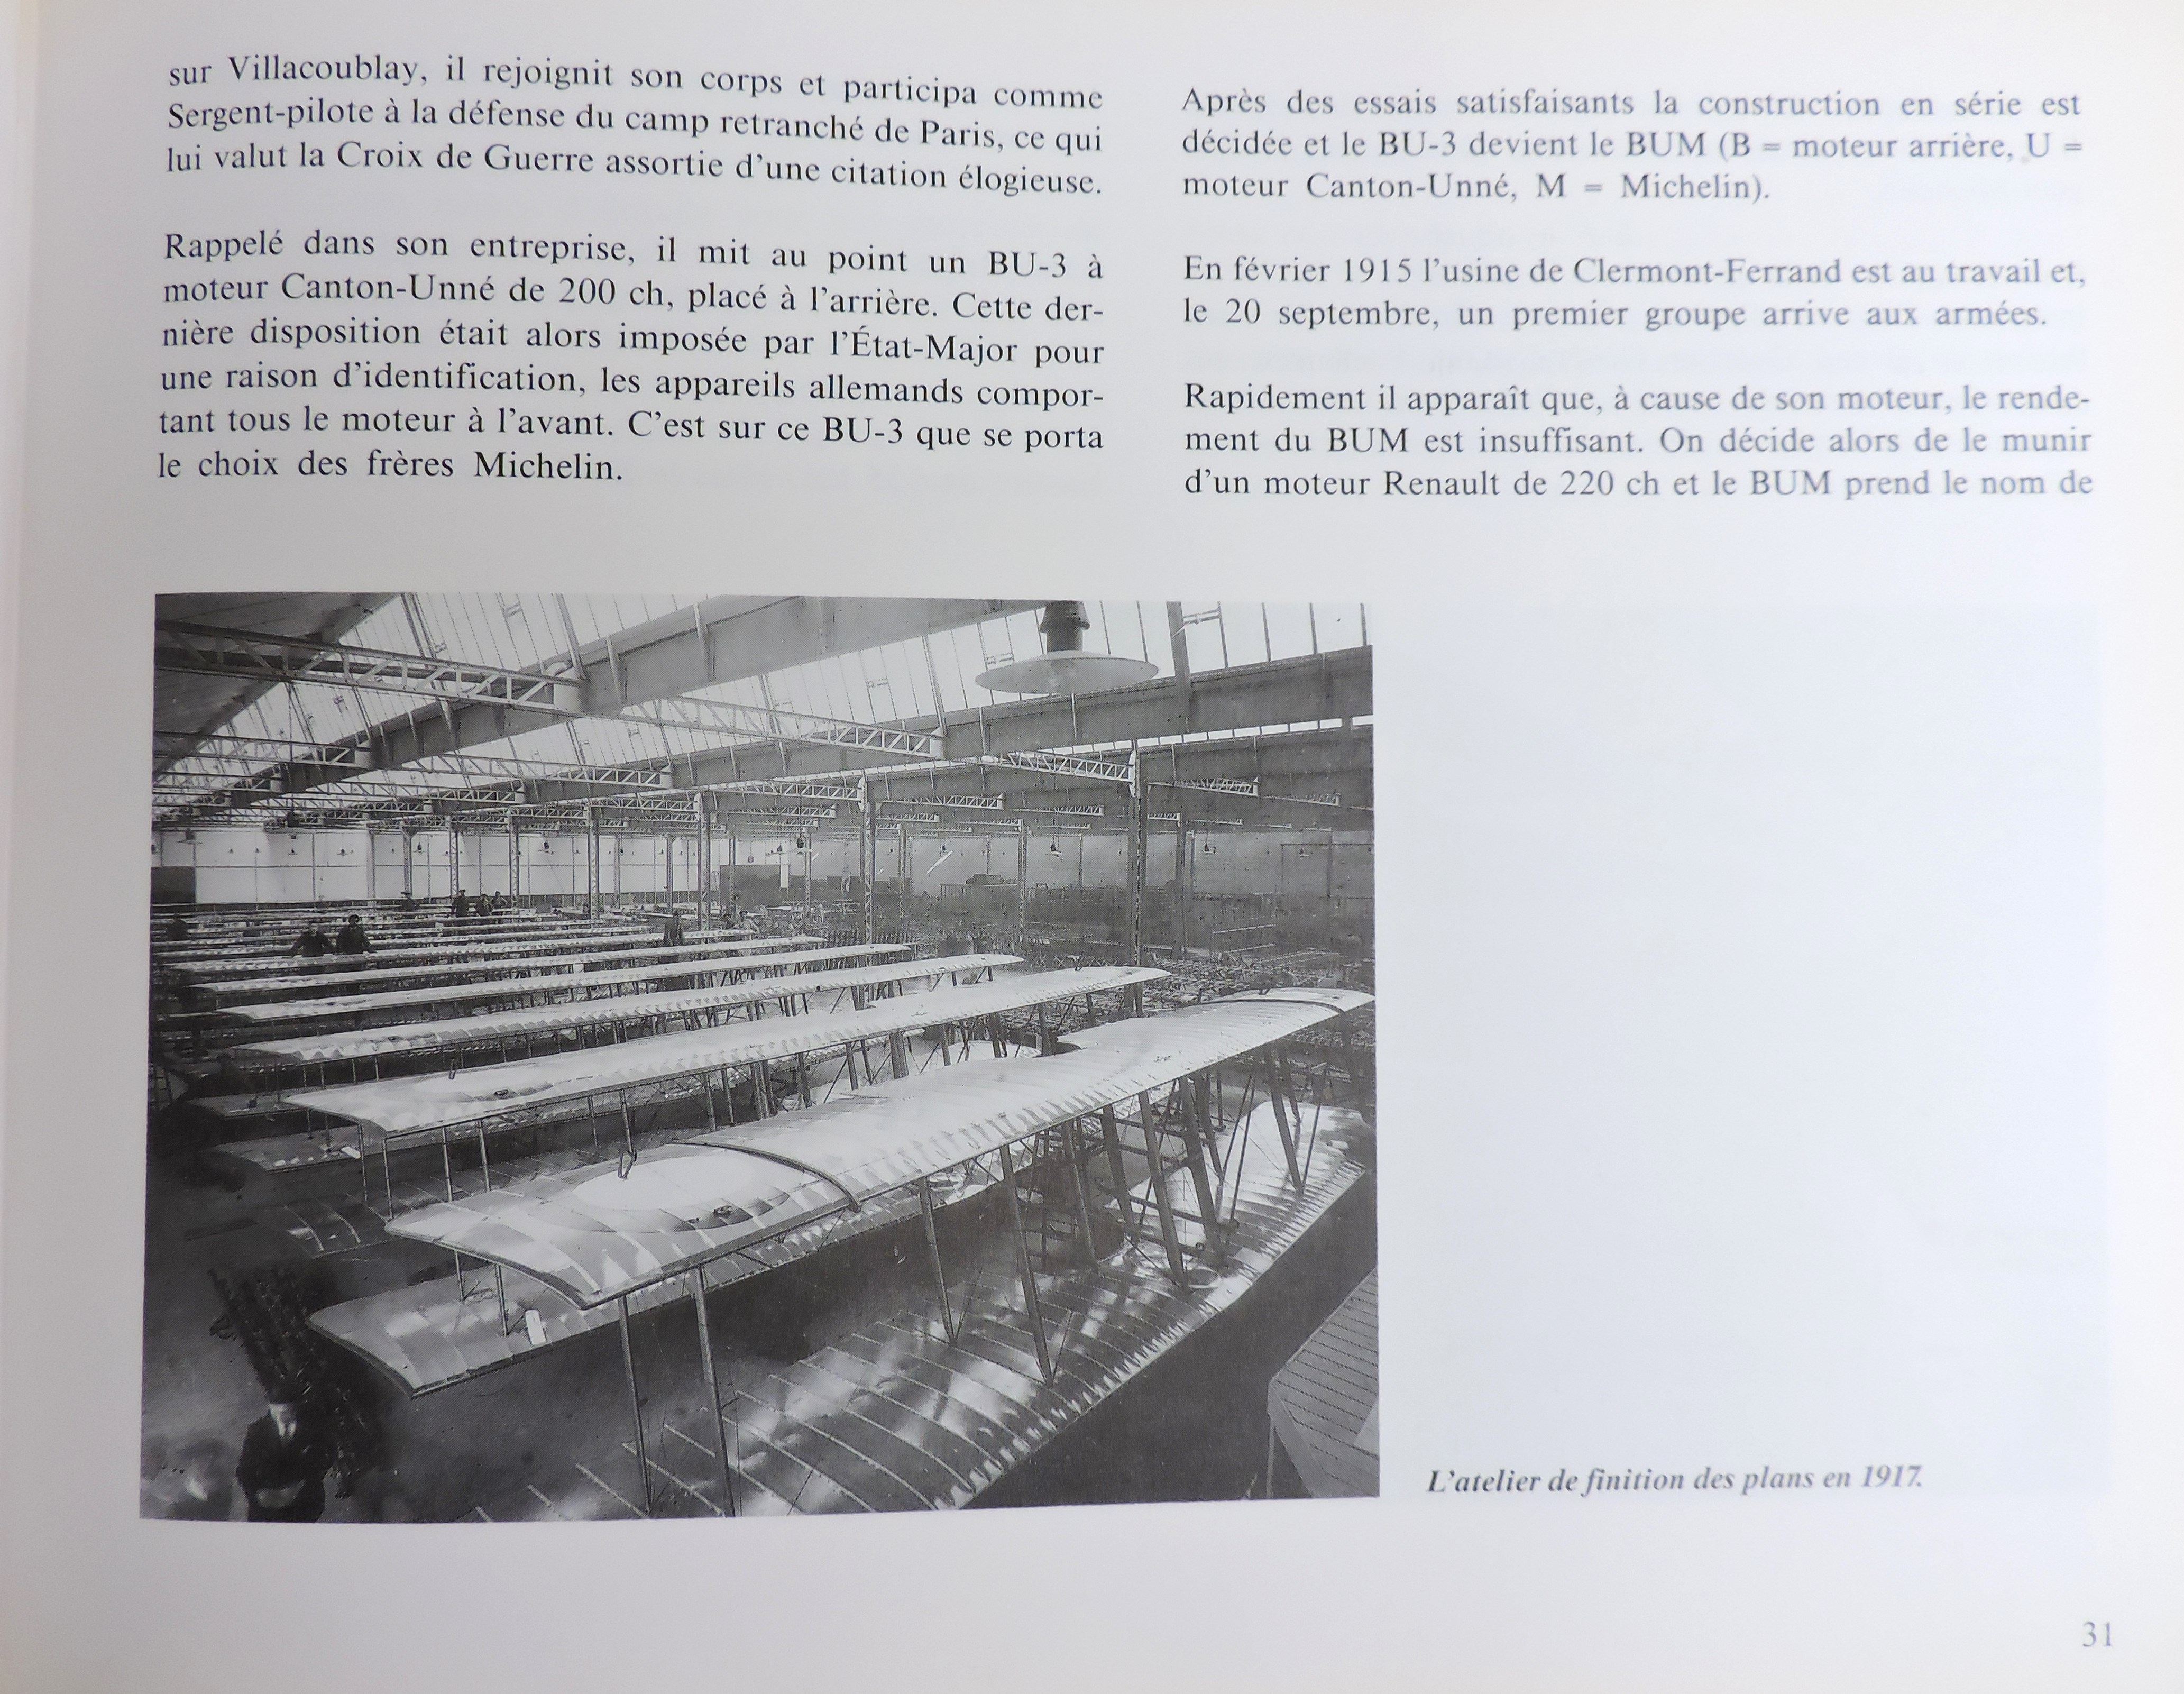 Renault et l&#039;aviation Gilbert Hatry Editions JCM